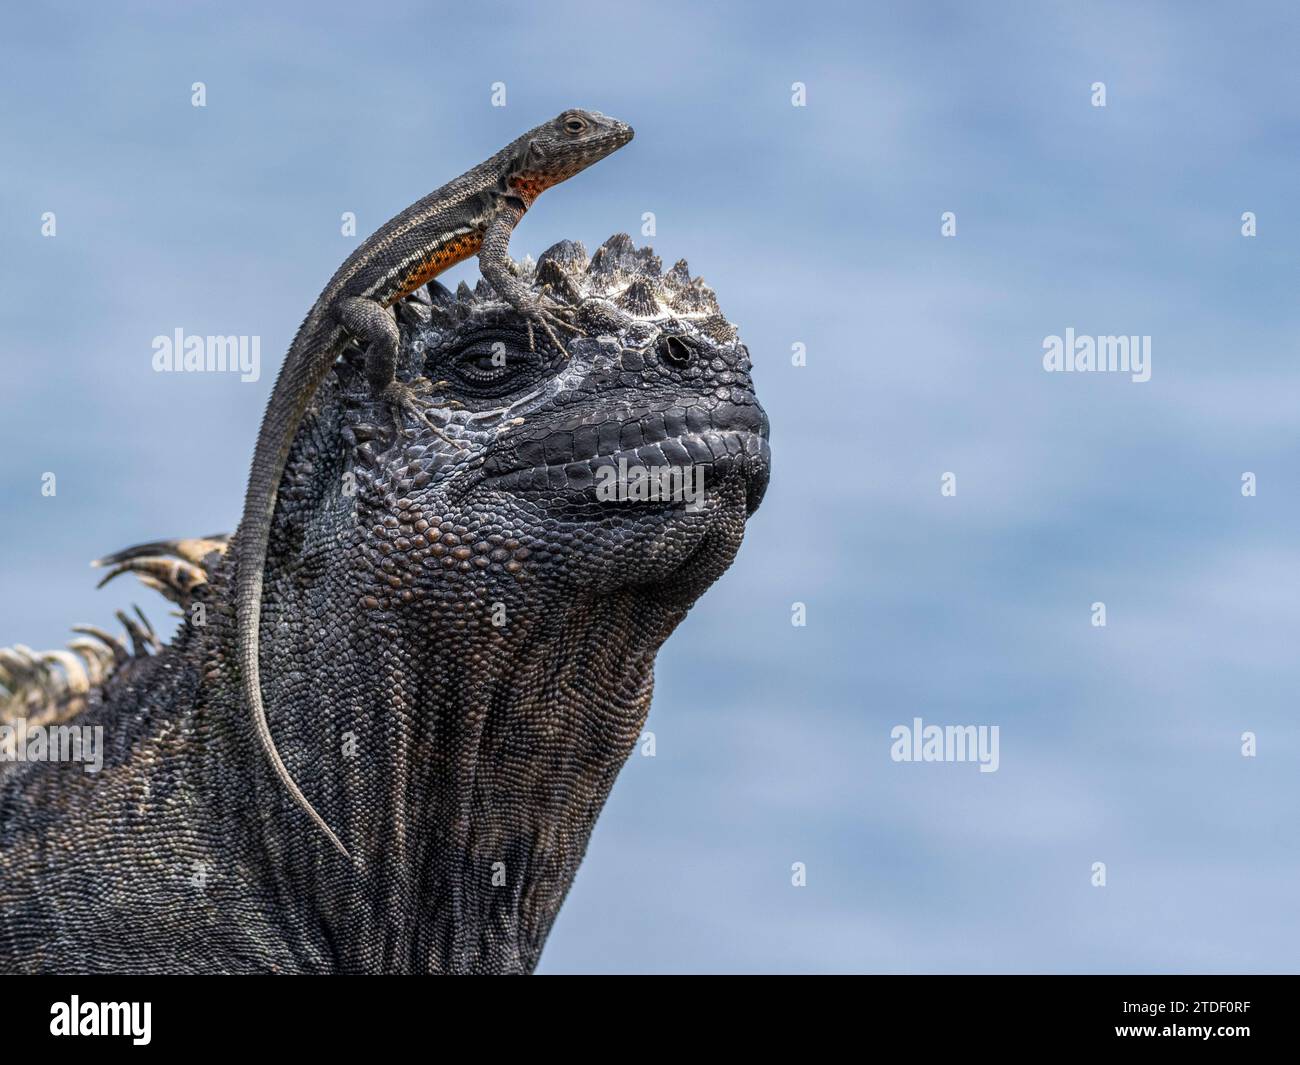 Iguane marin des Galapagos (Amblyrhynchus cristatus), lézard de lave des Galapagos (Microlophus albemarlensis), îles Galapagos, site du patrimoine mondial de l'UNESCO Banque D'Images